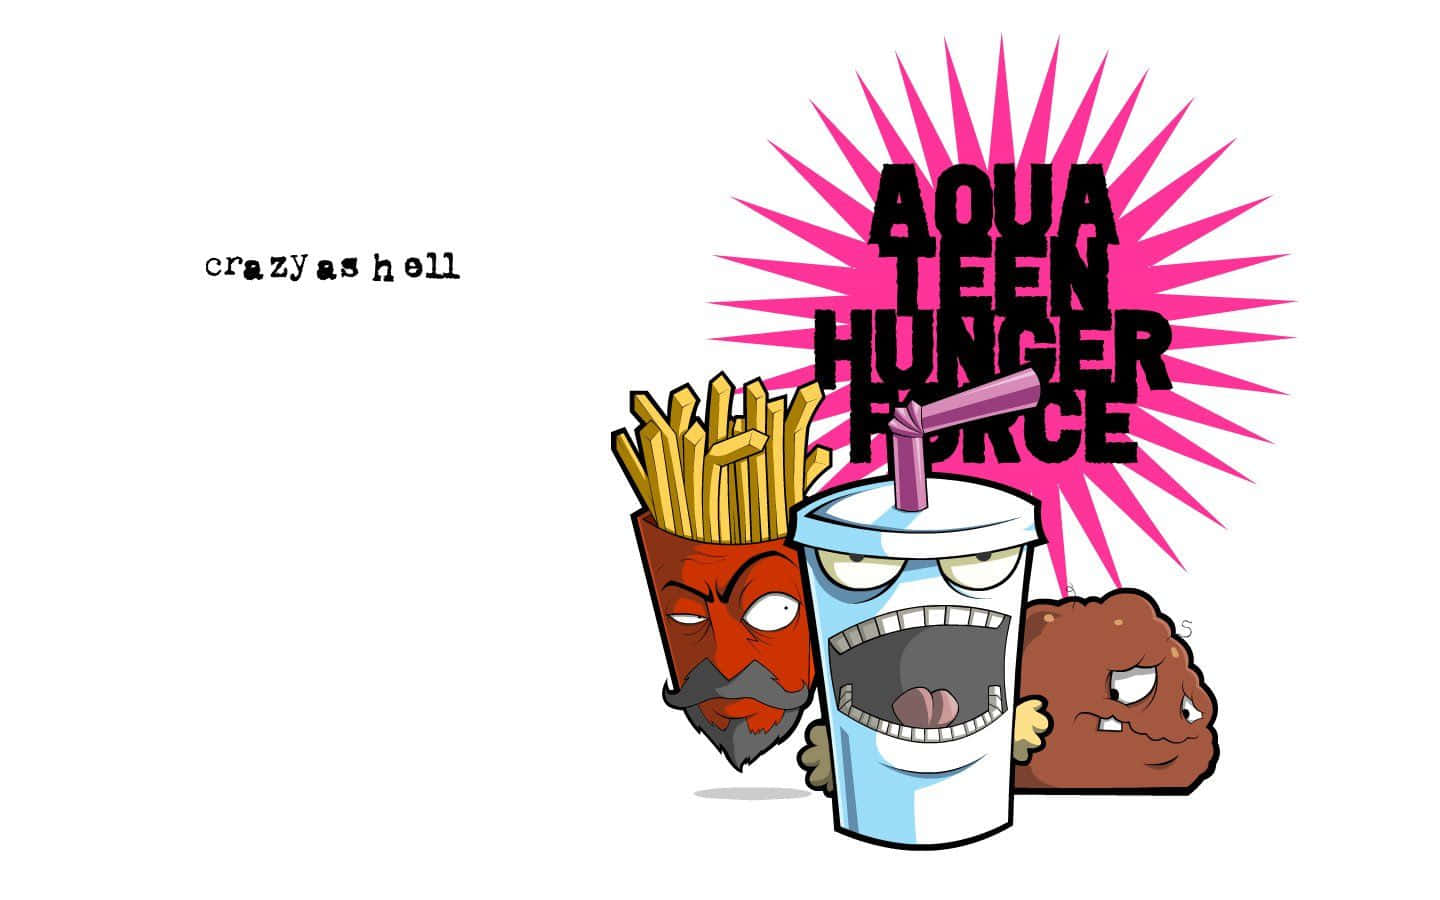 Aqua Teen Hunger Force - The Ultimate Fast Food Superheroes